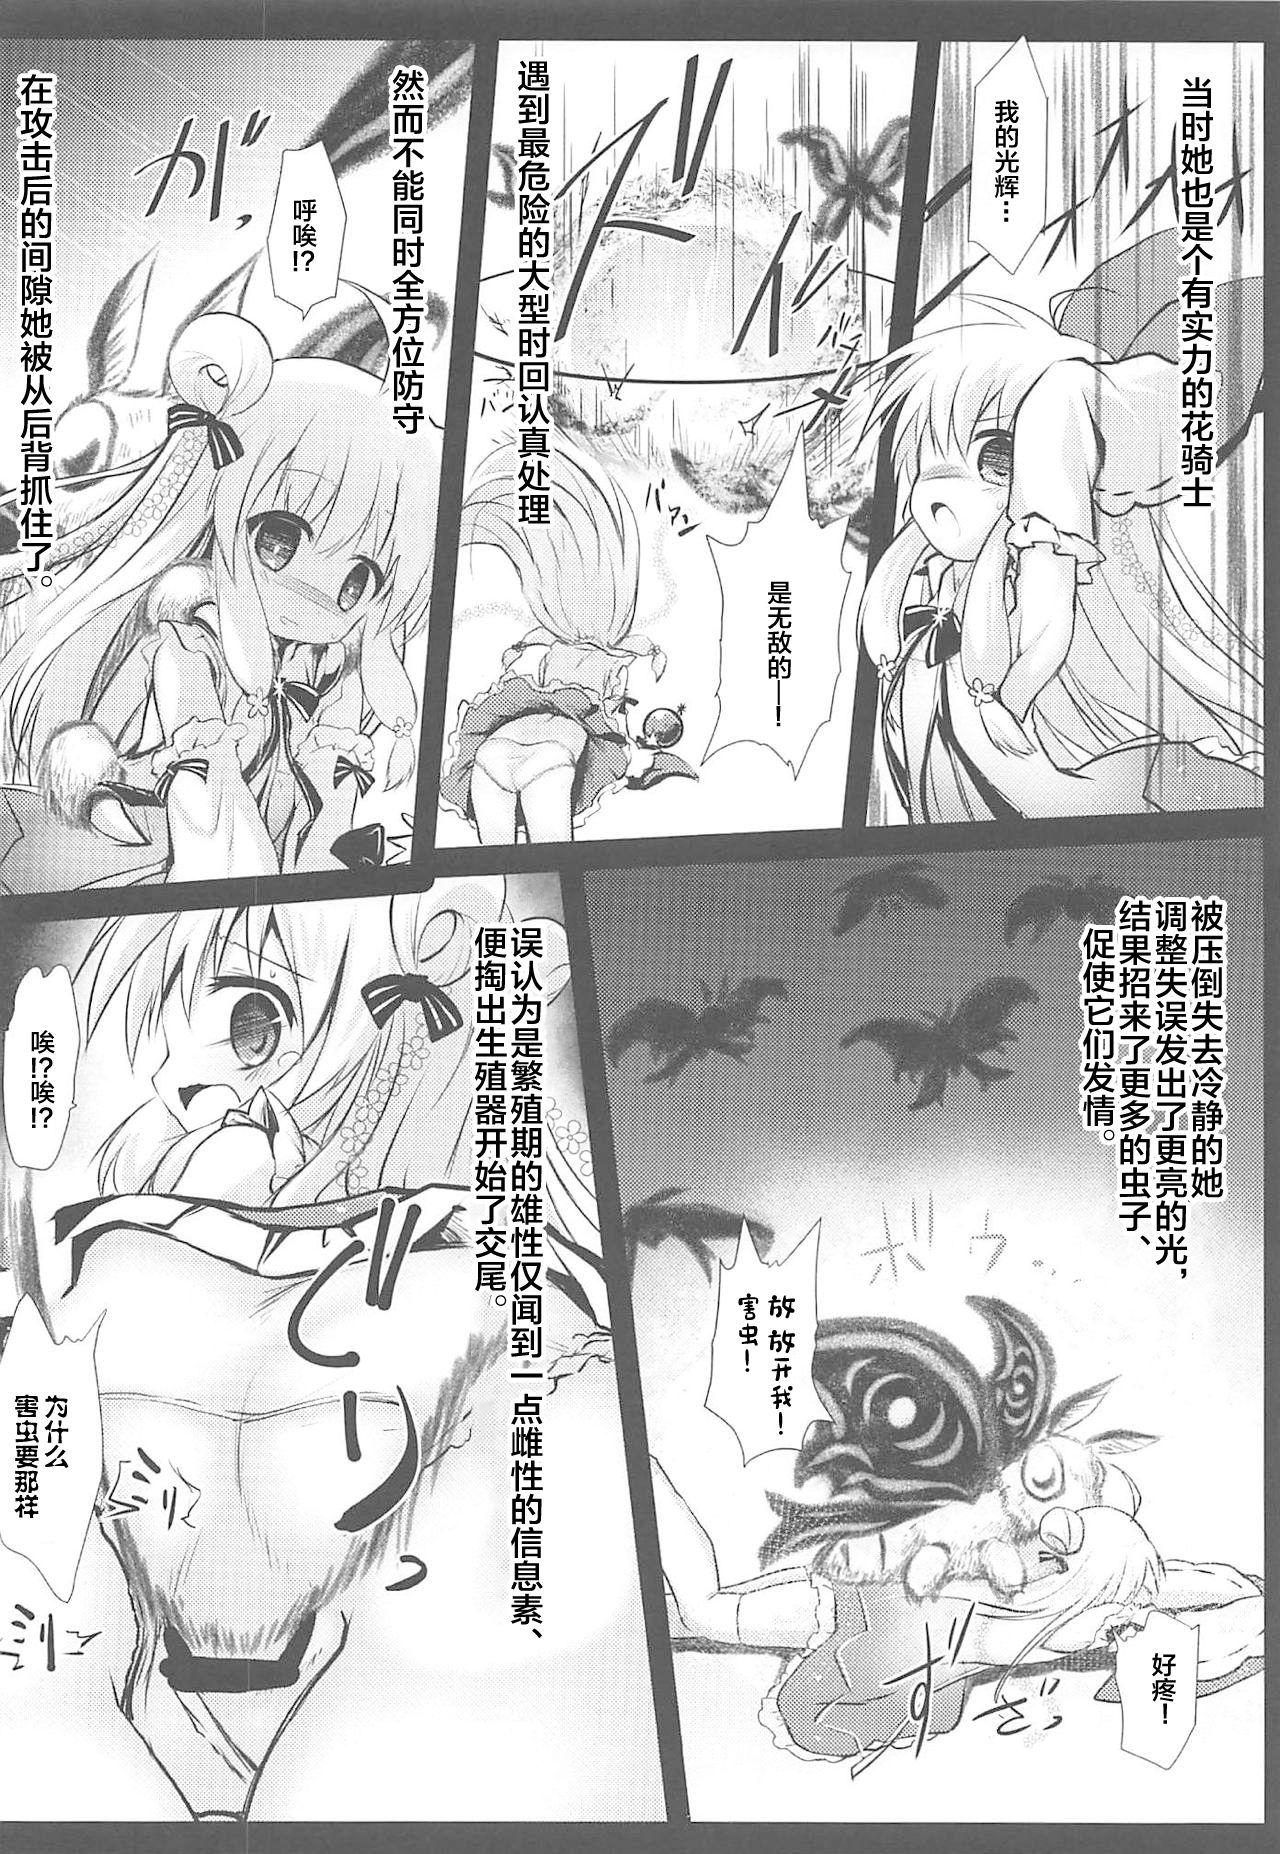 Deep Gaichuu Higai Houkokusho File 3 - Flower knight girl Hidden Camera - Page 6